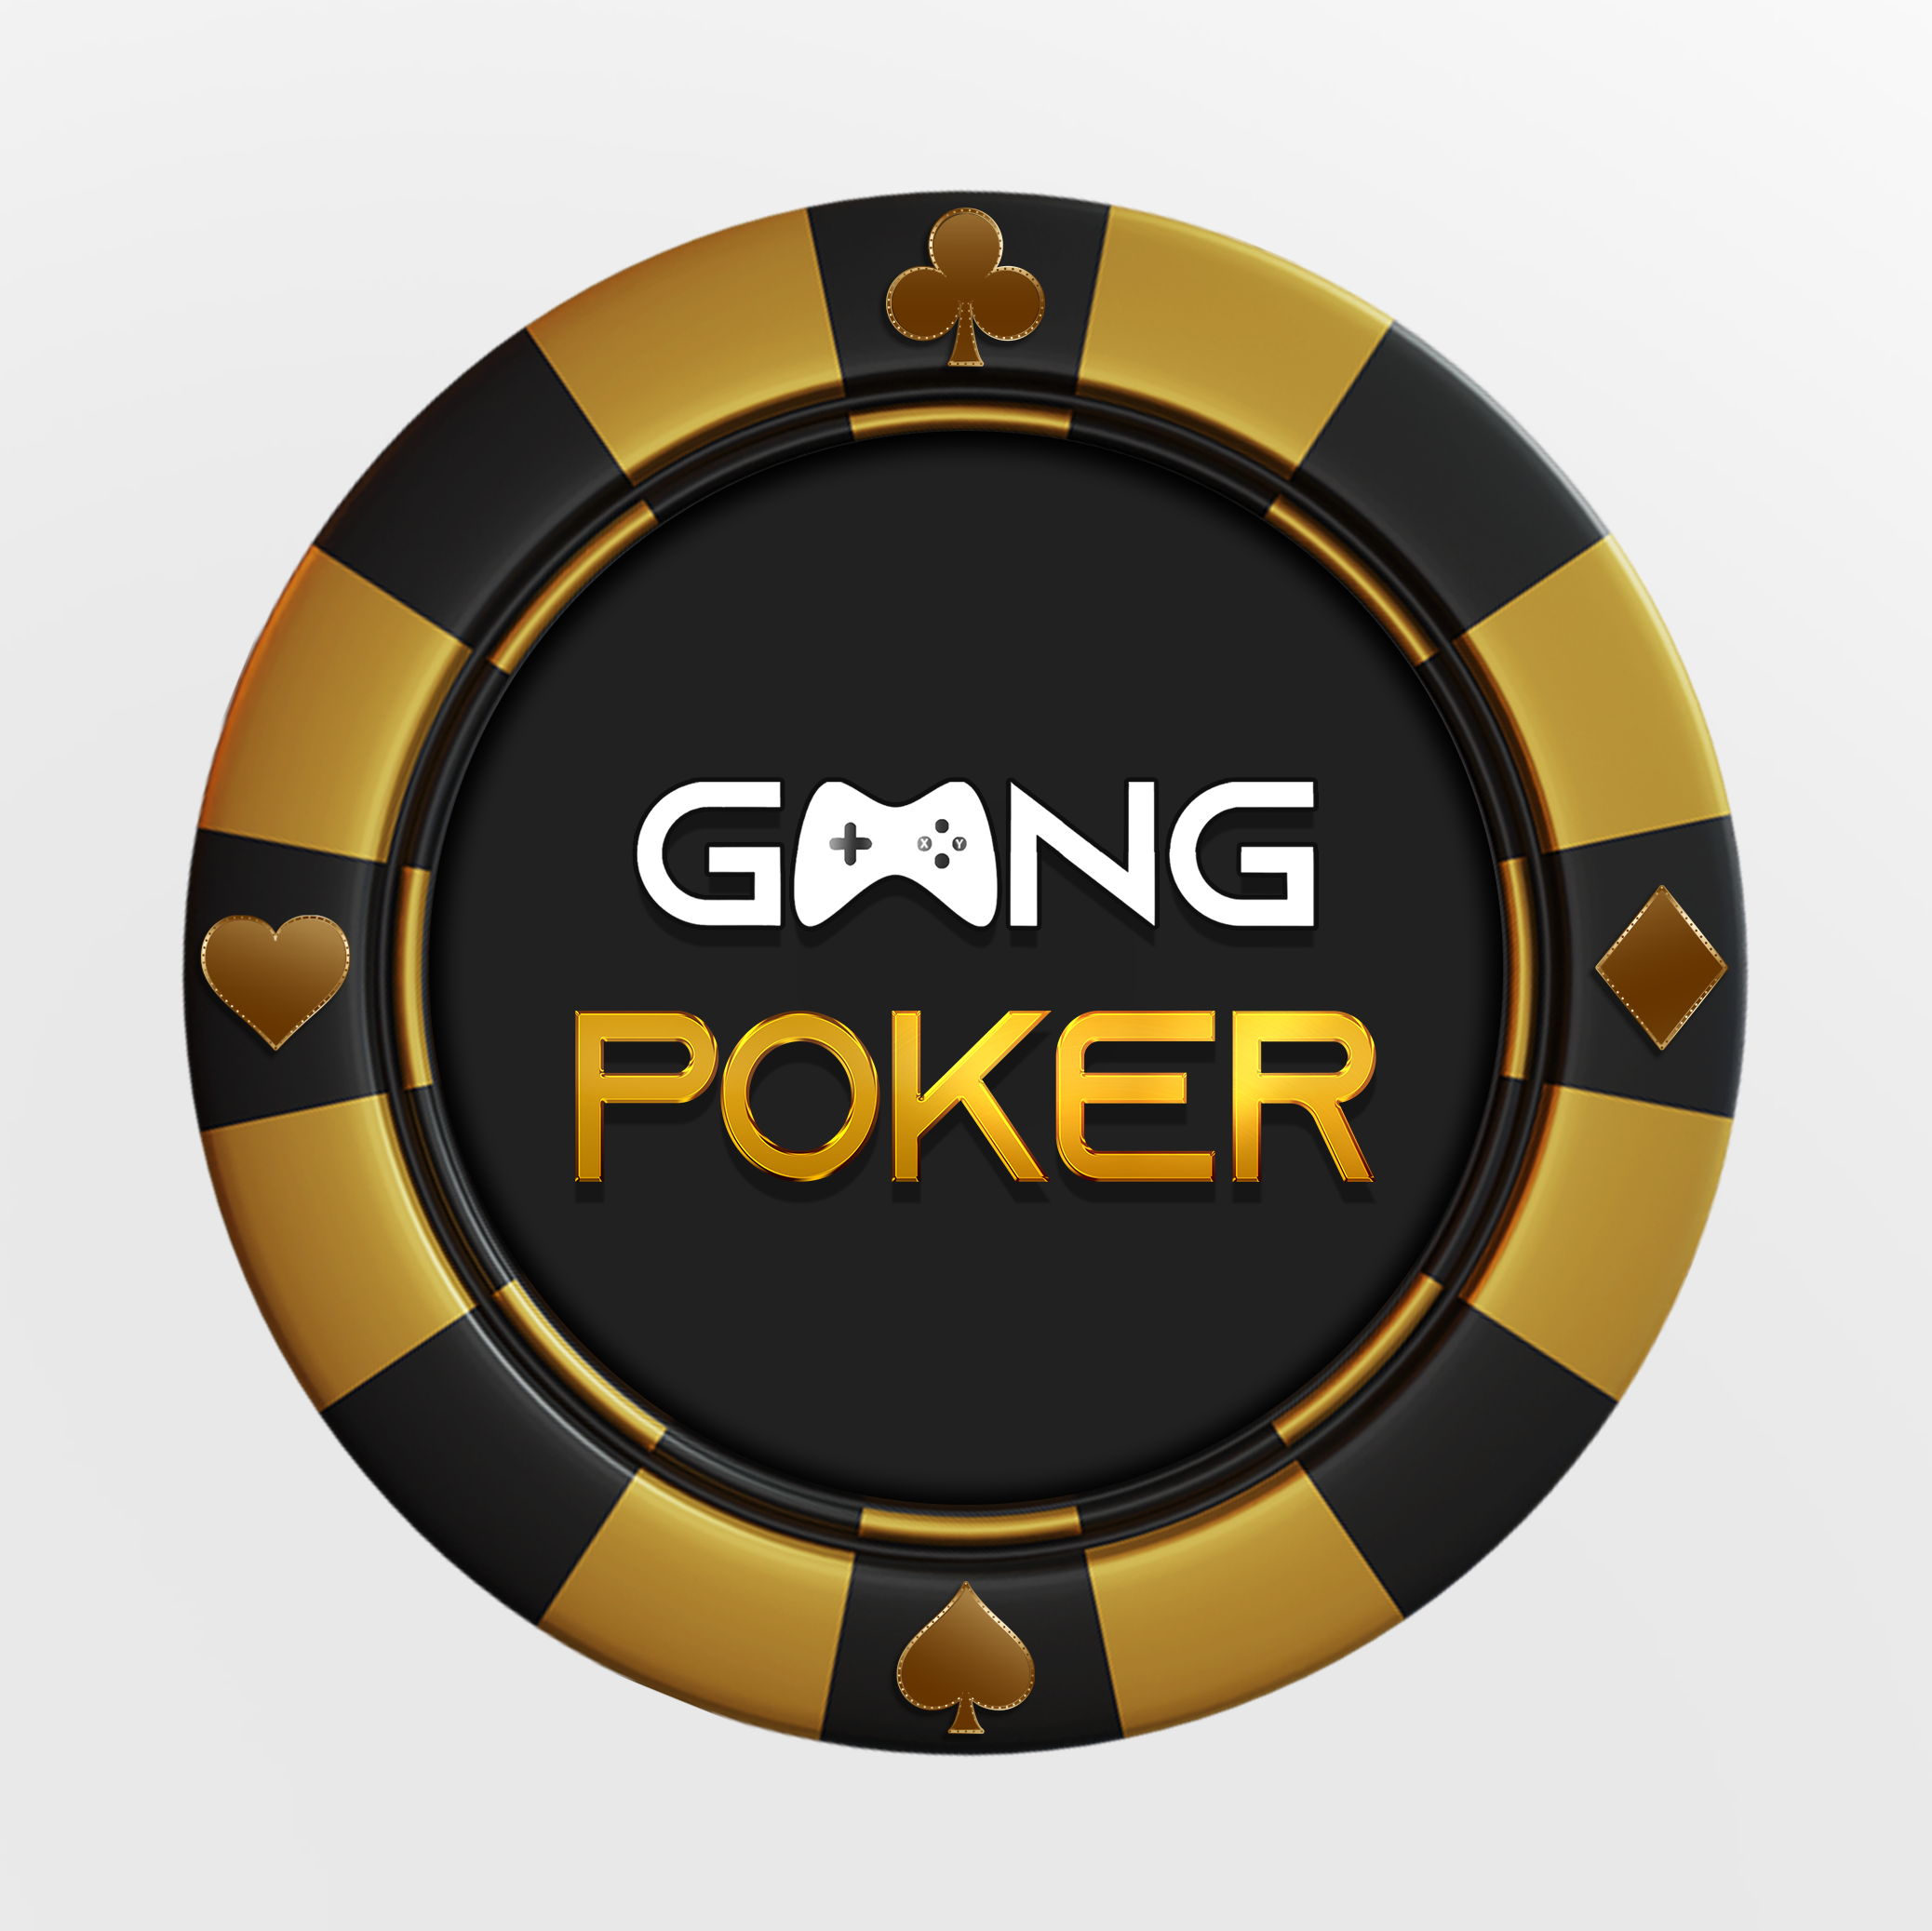 GMNG Poker